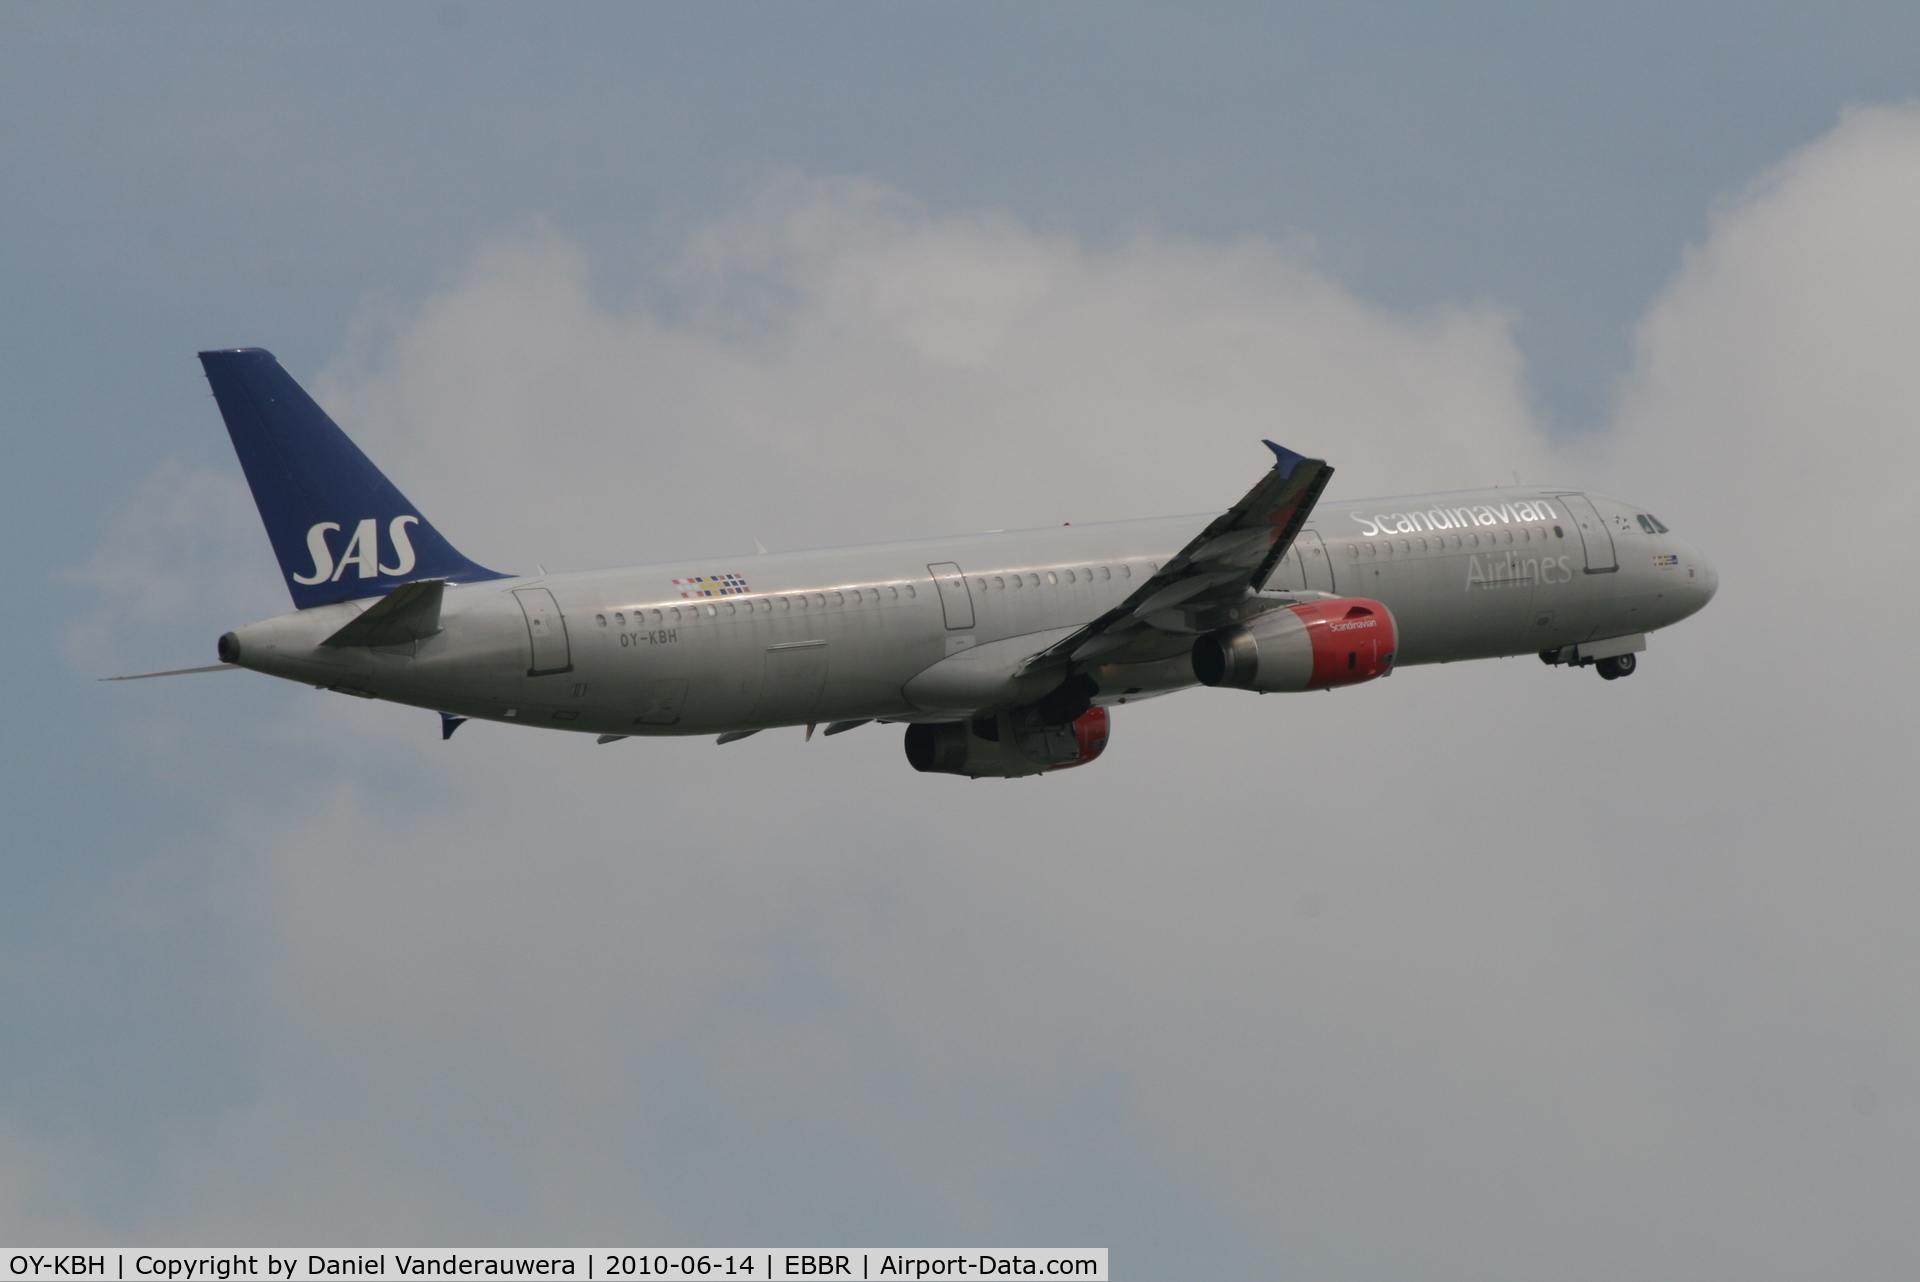 OY-KBH, 2002 Airbus A321-232 C/N 1675, Flight SK594 is taking off from RWY 07R